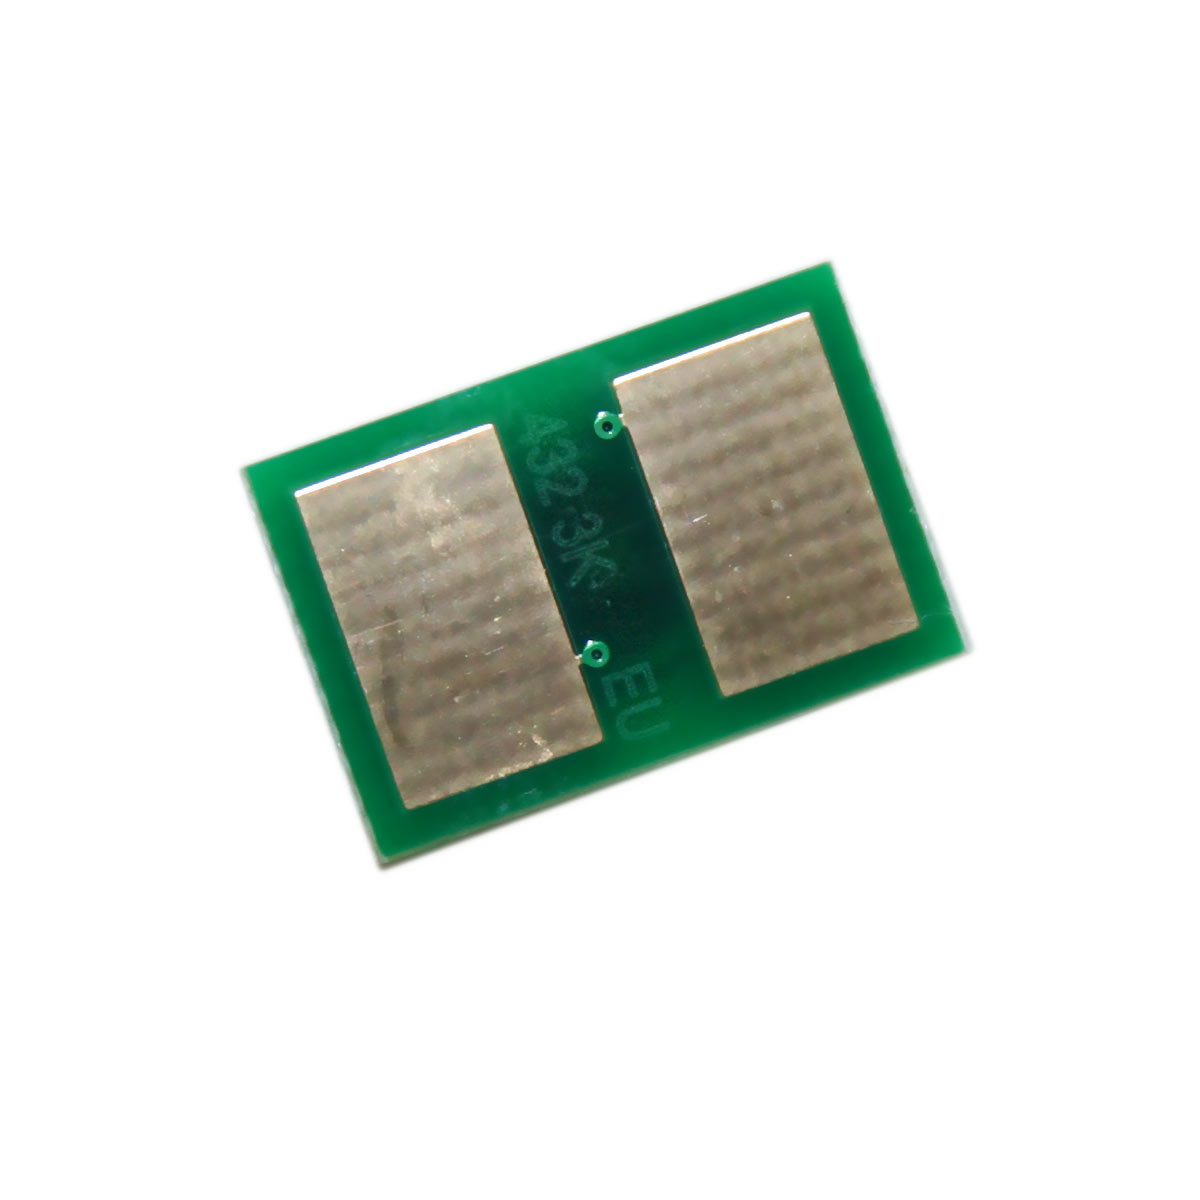 Counter chip OKI B 412